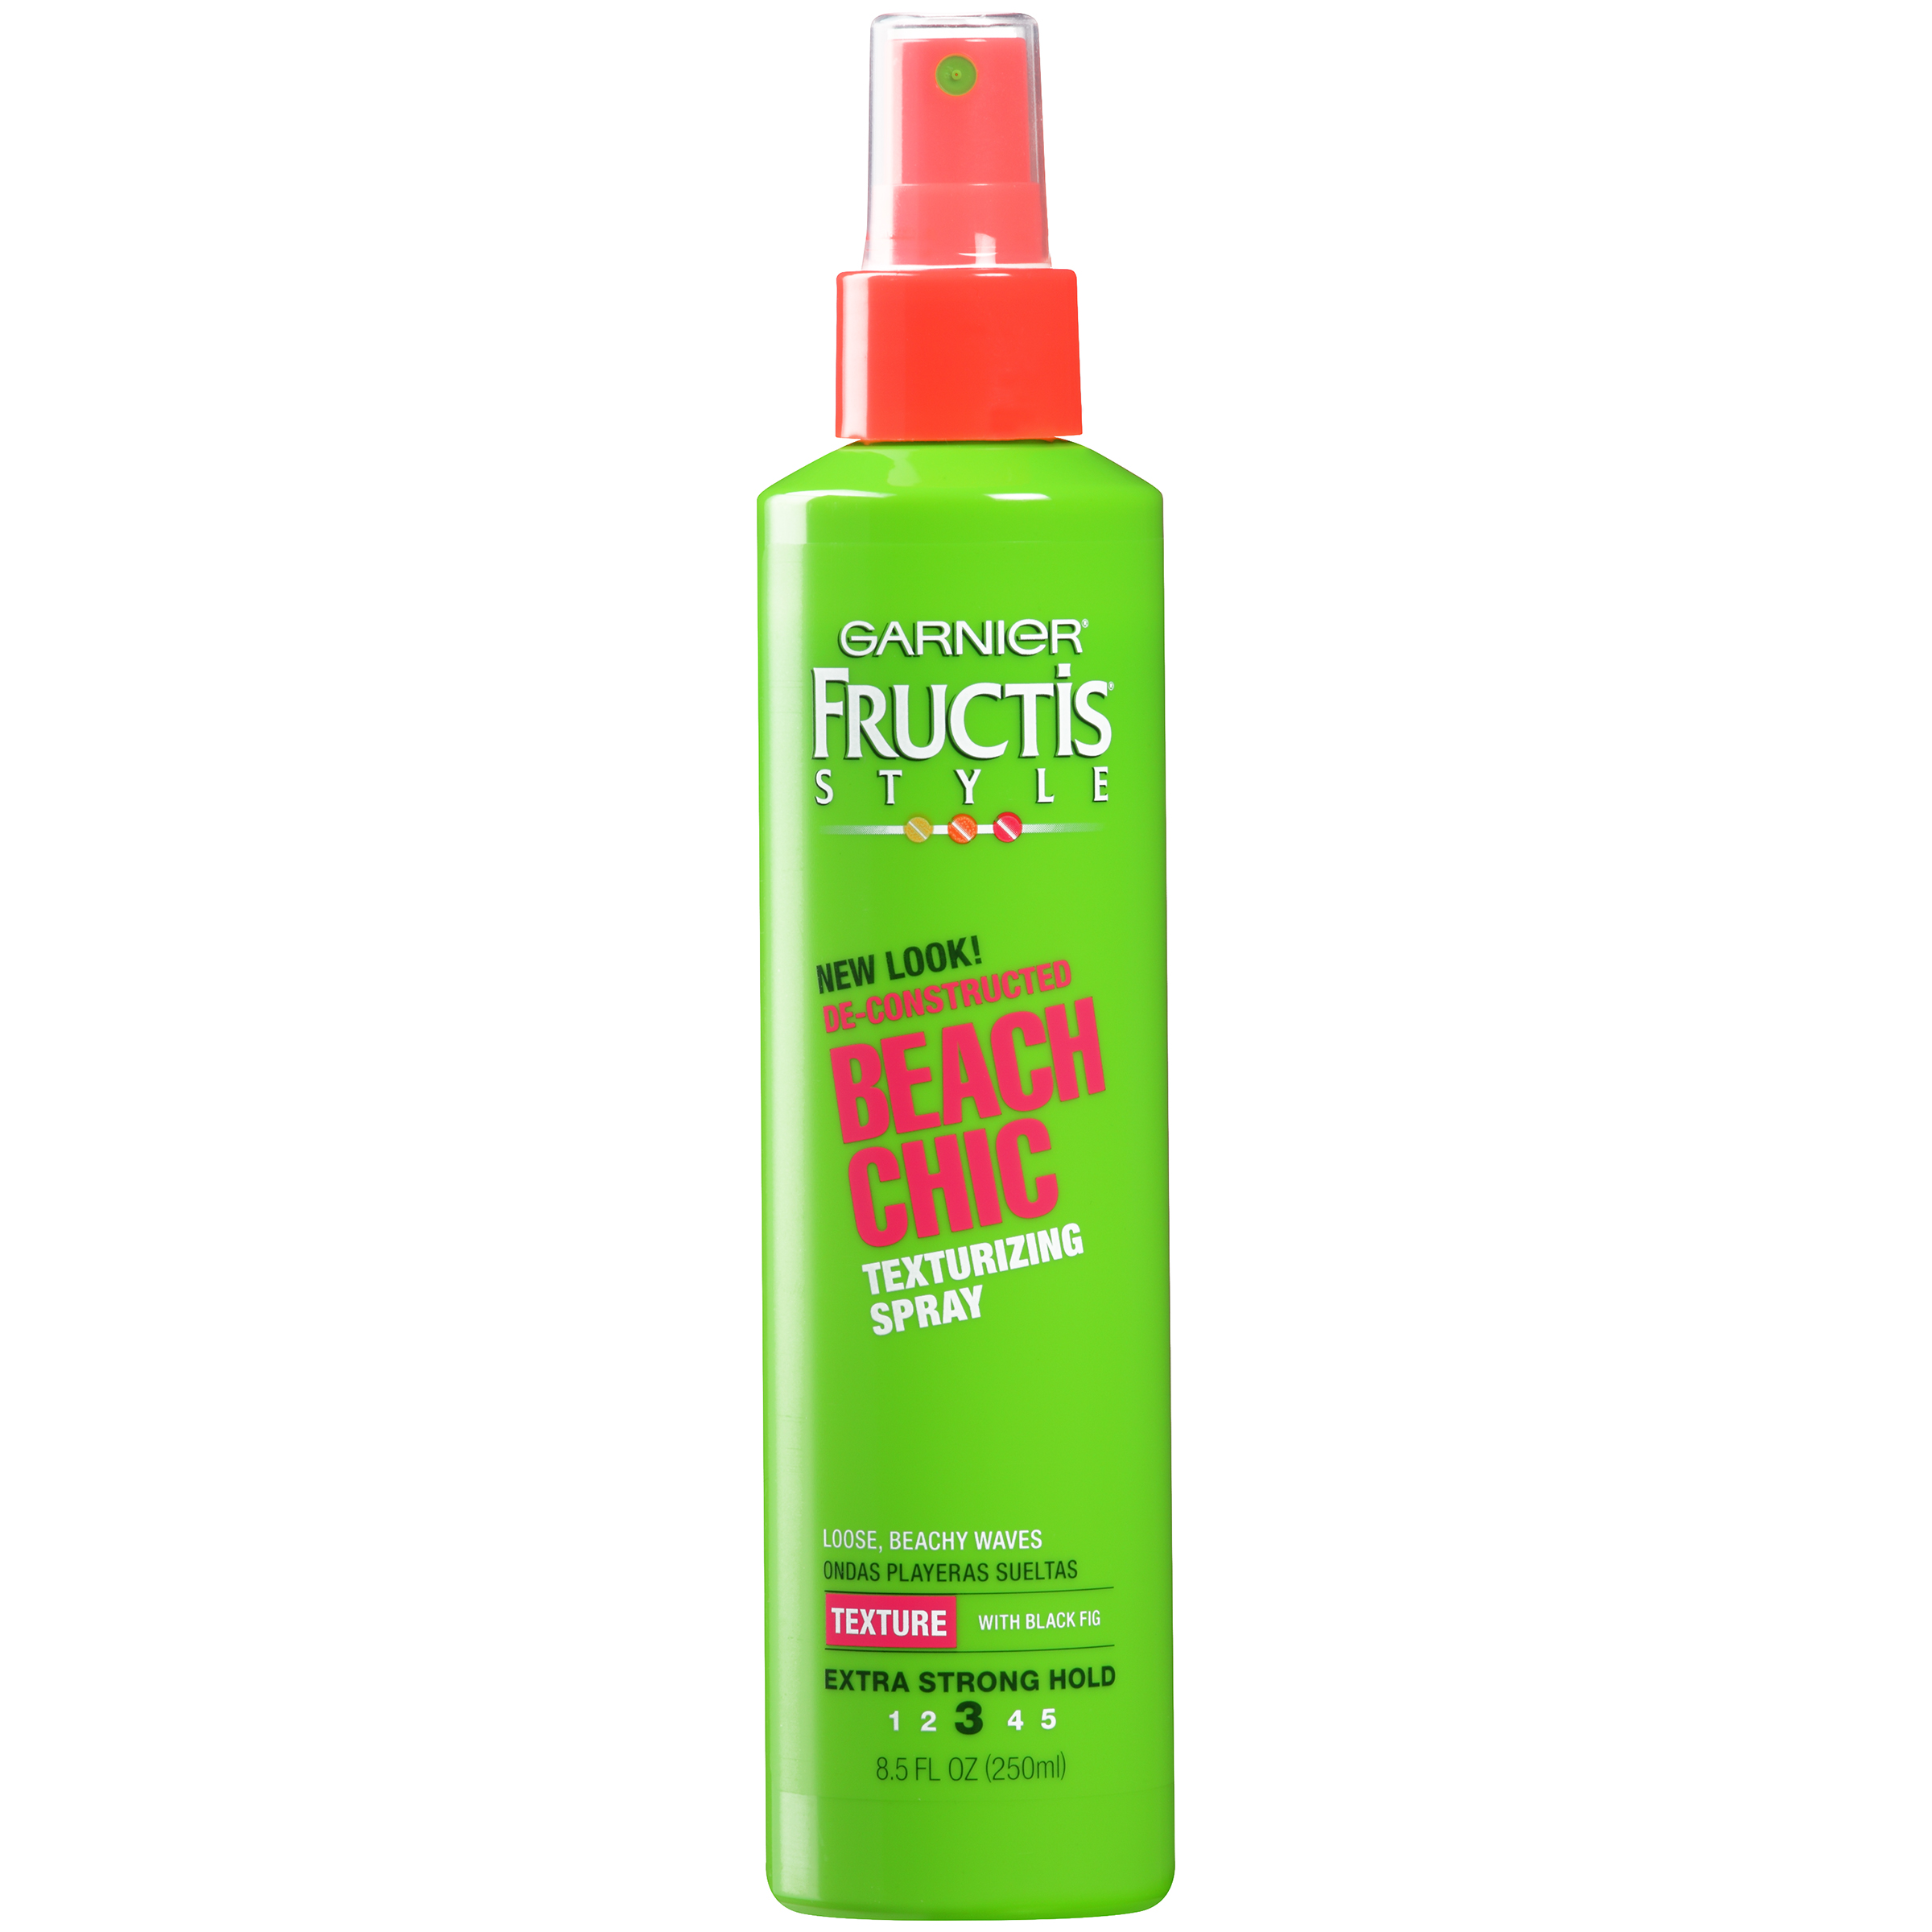 Garnier Fructis® Style De-Constructed Beach Chic Texturizing Spray  fl.  oz. Bottle